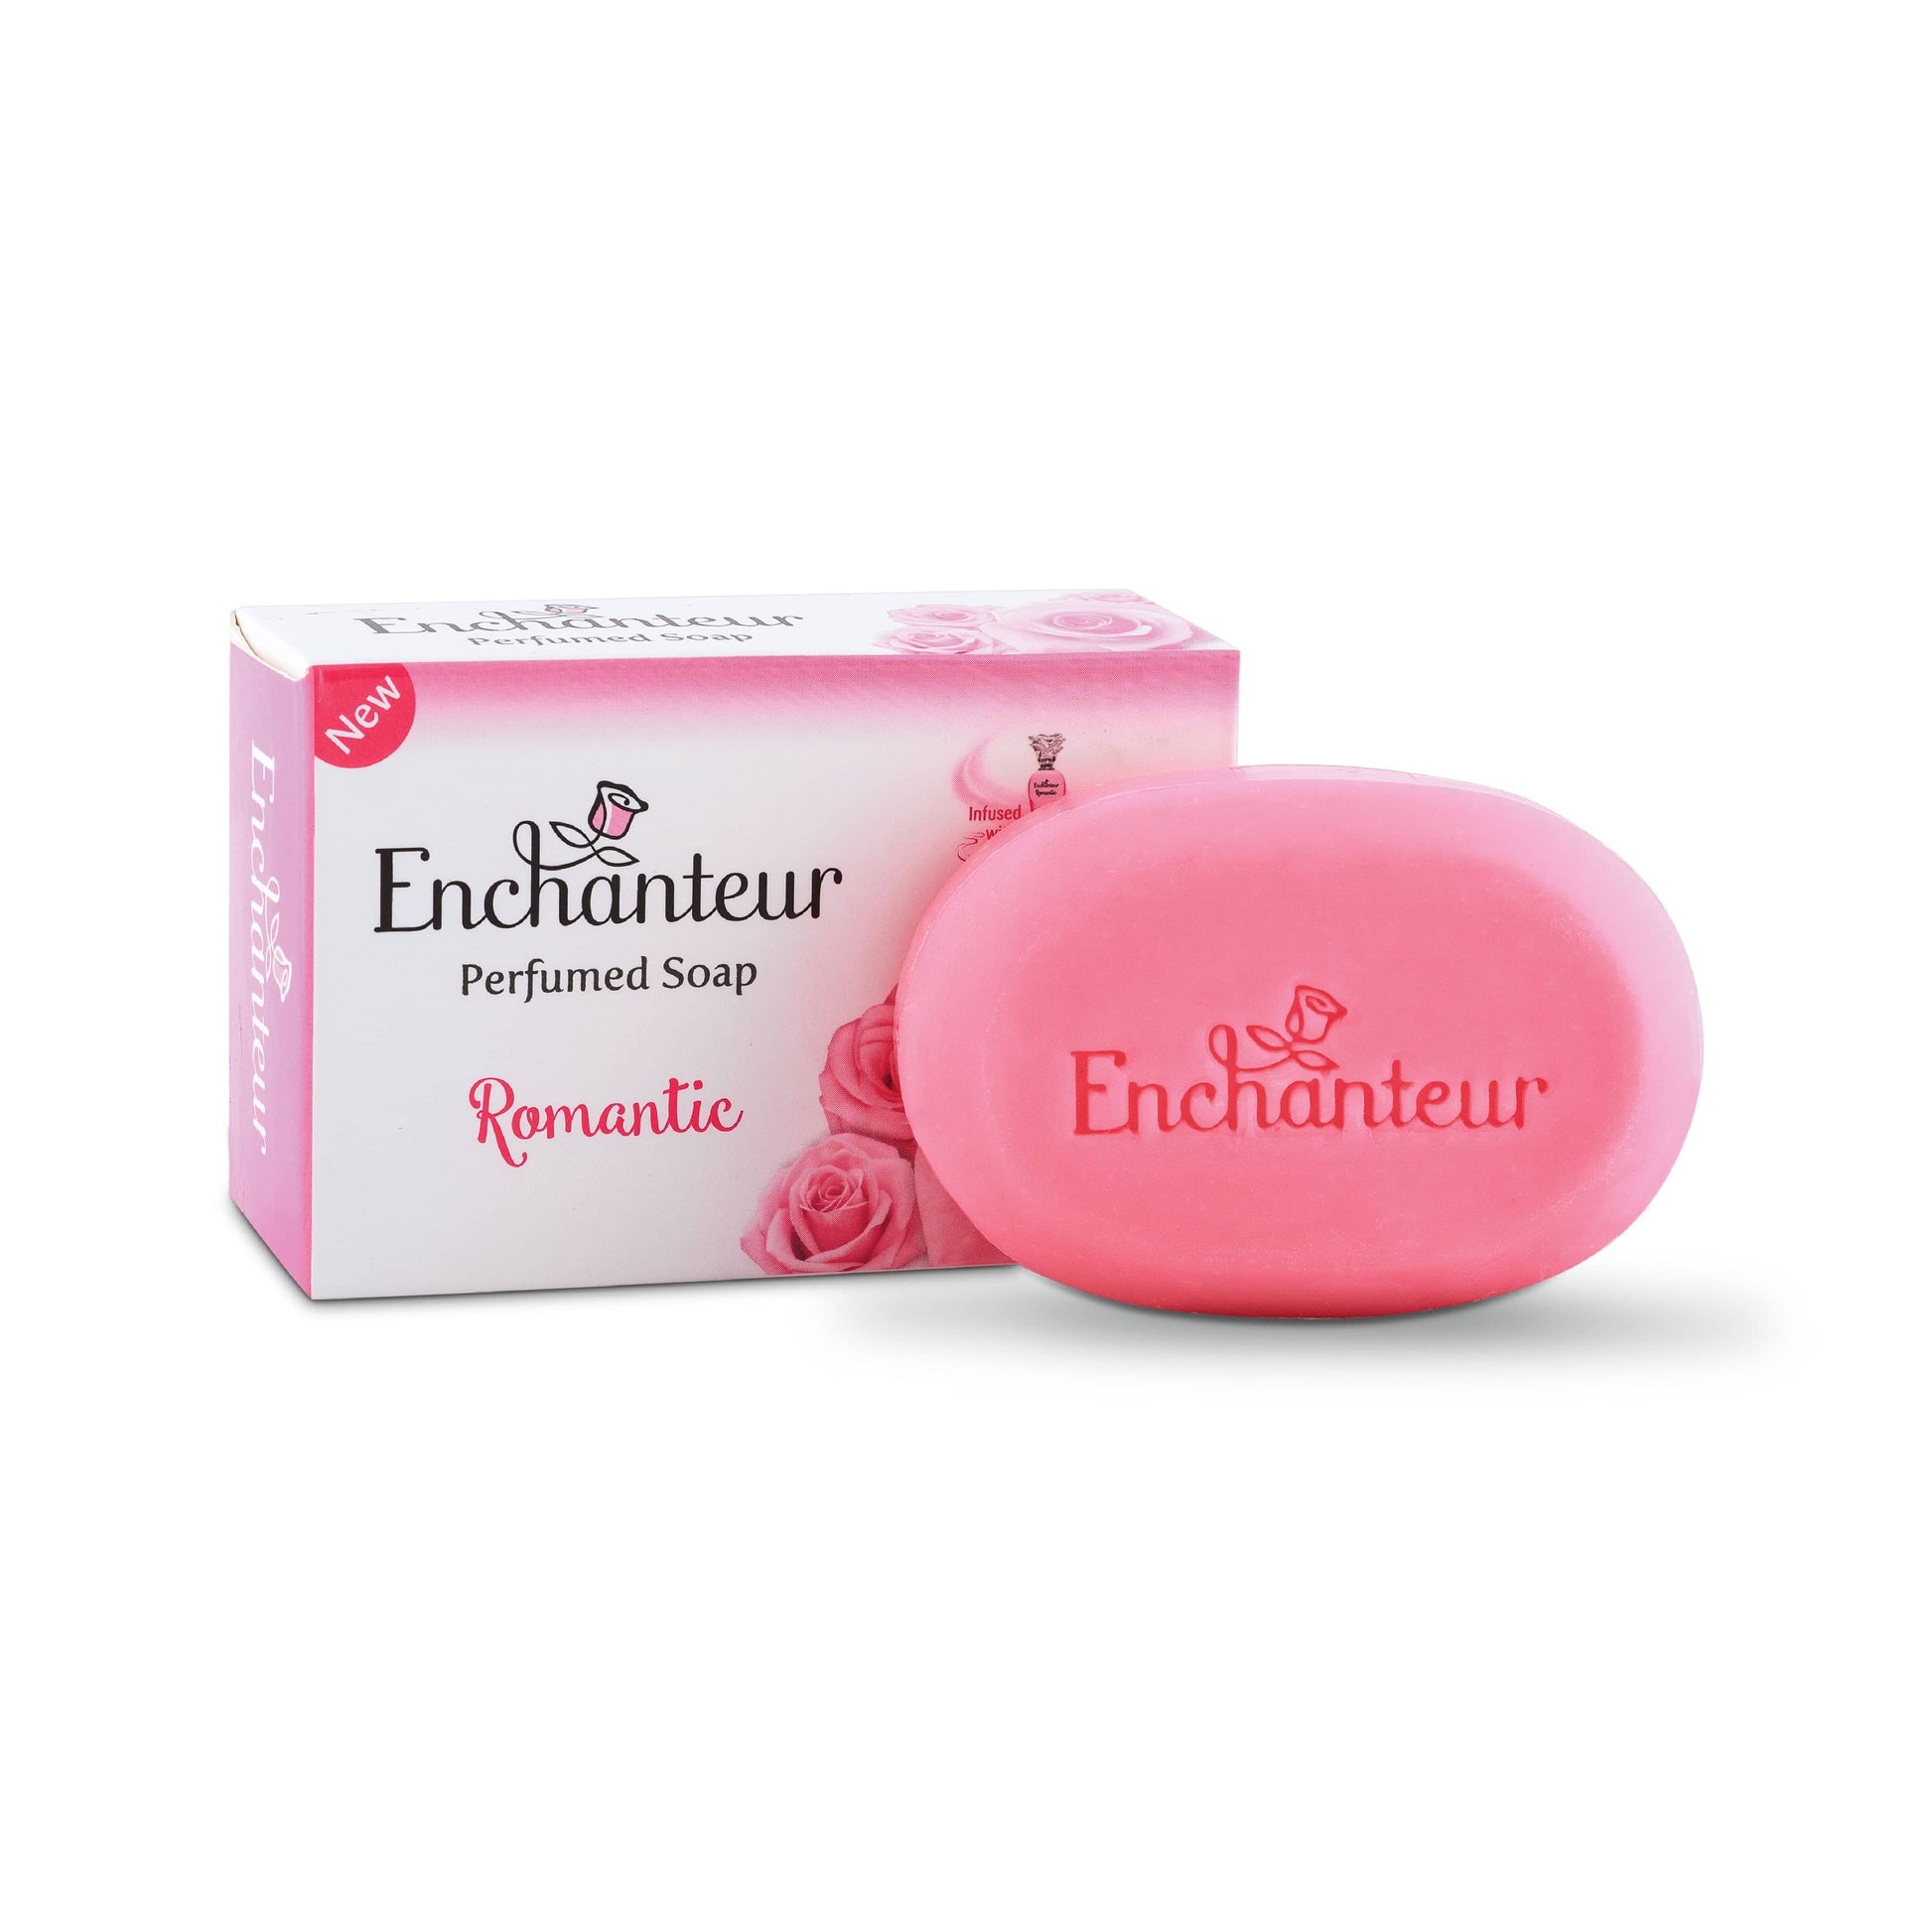 Enchanteur Perfumed Romantic Soap, Pack of 3+1 By Enchanteur